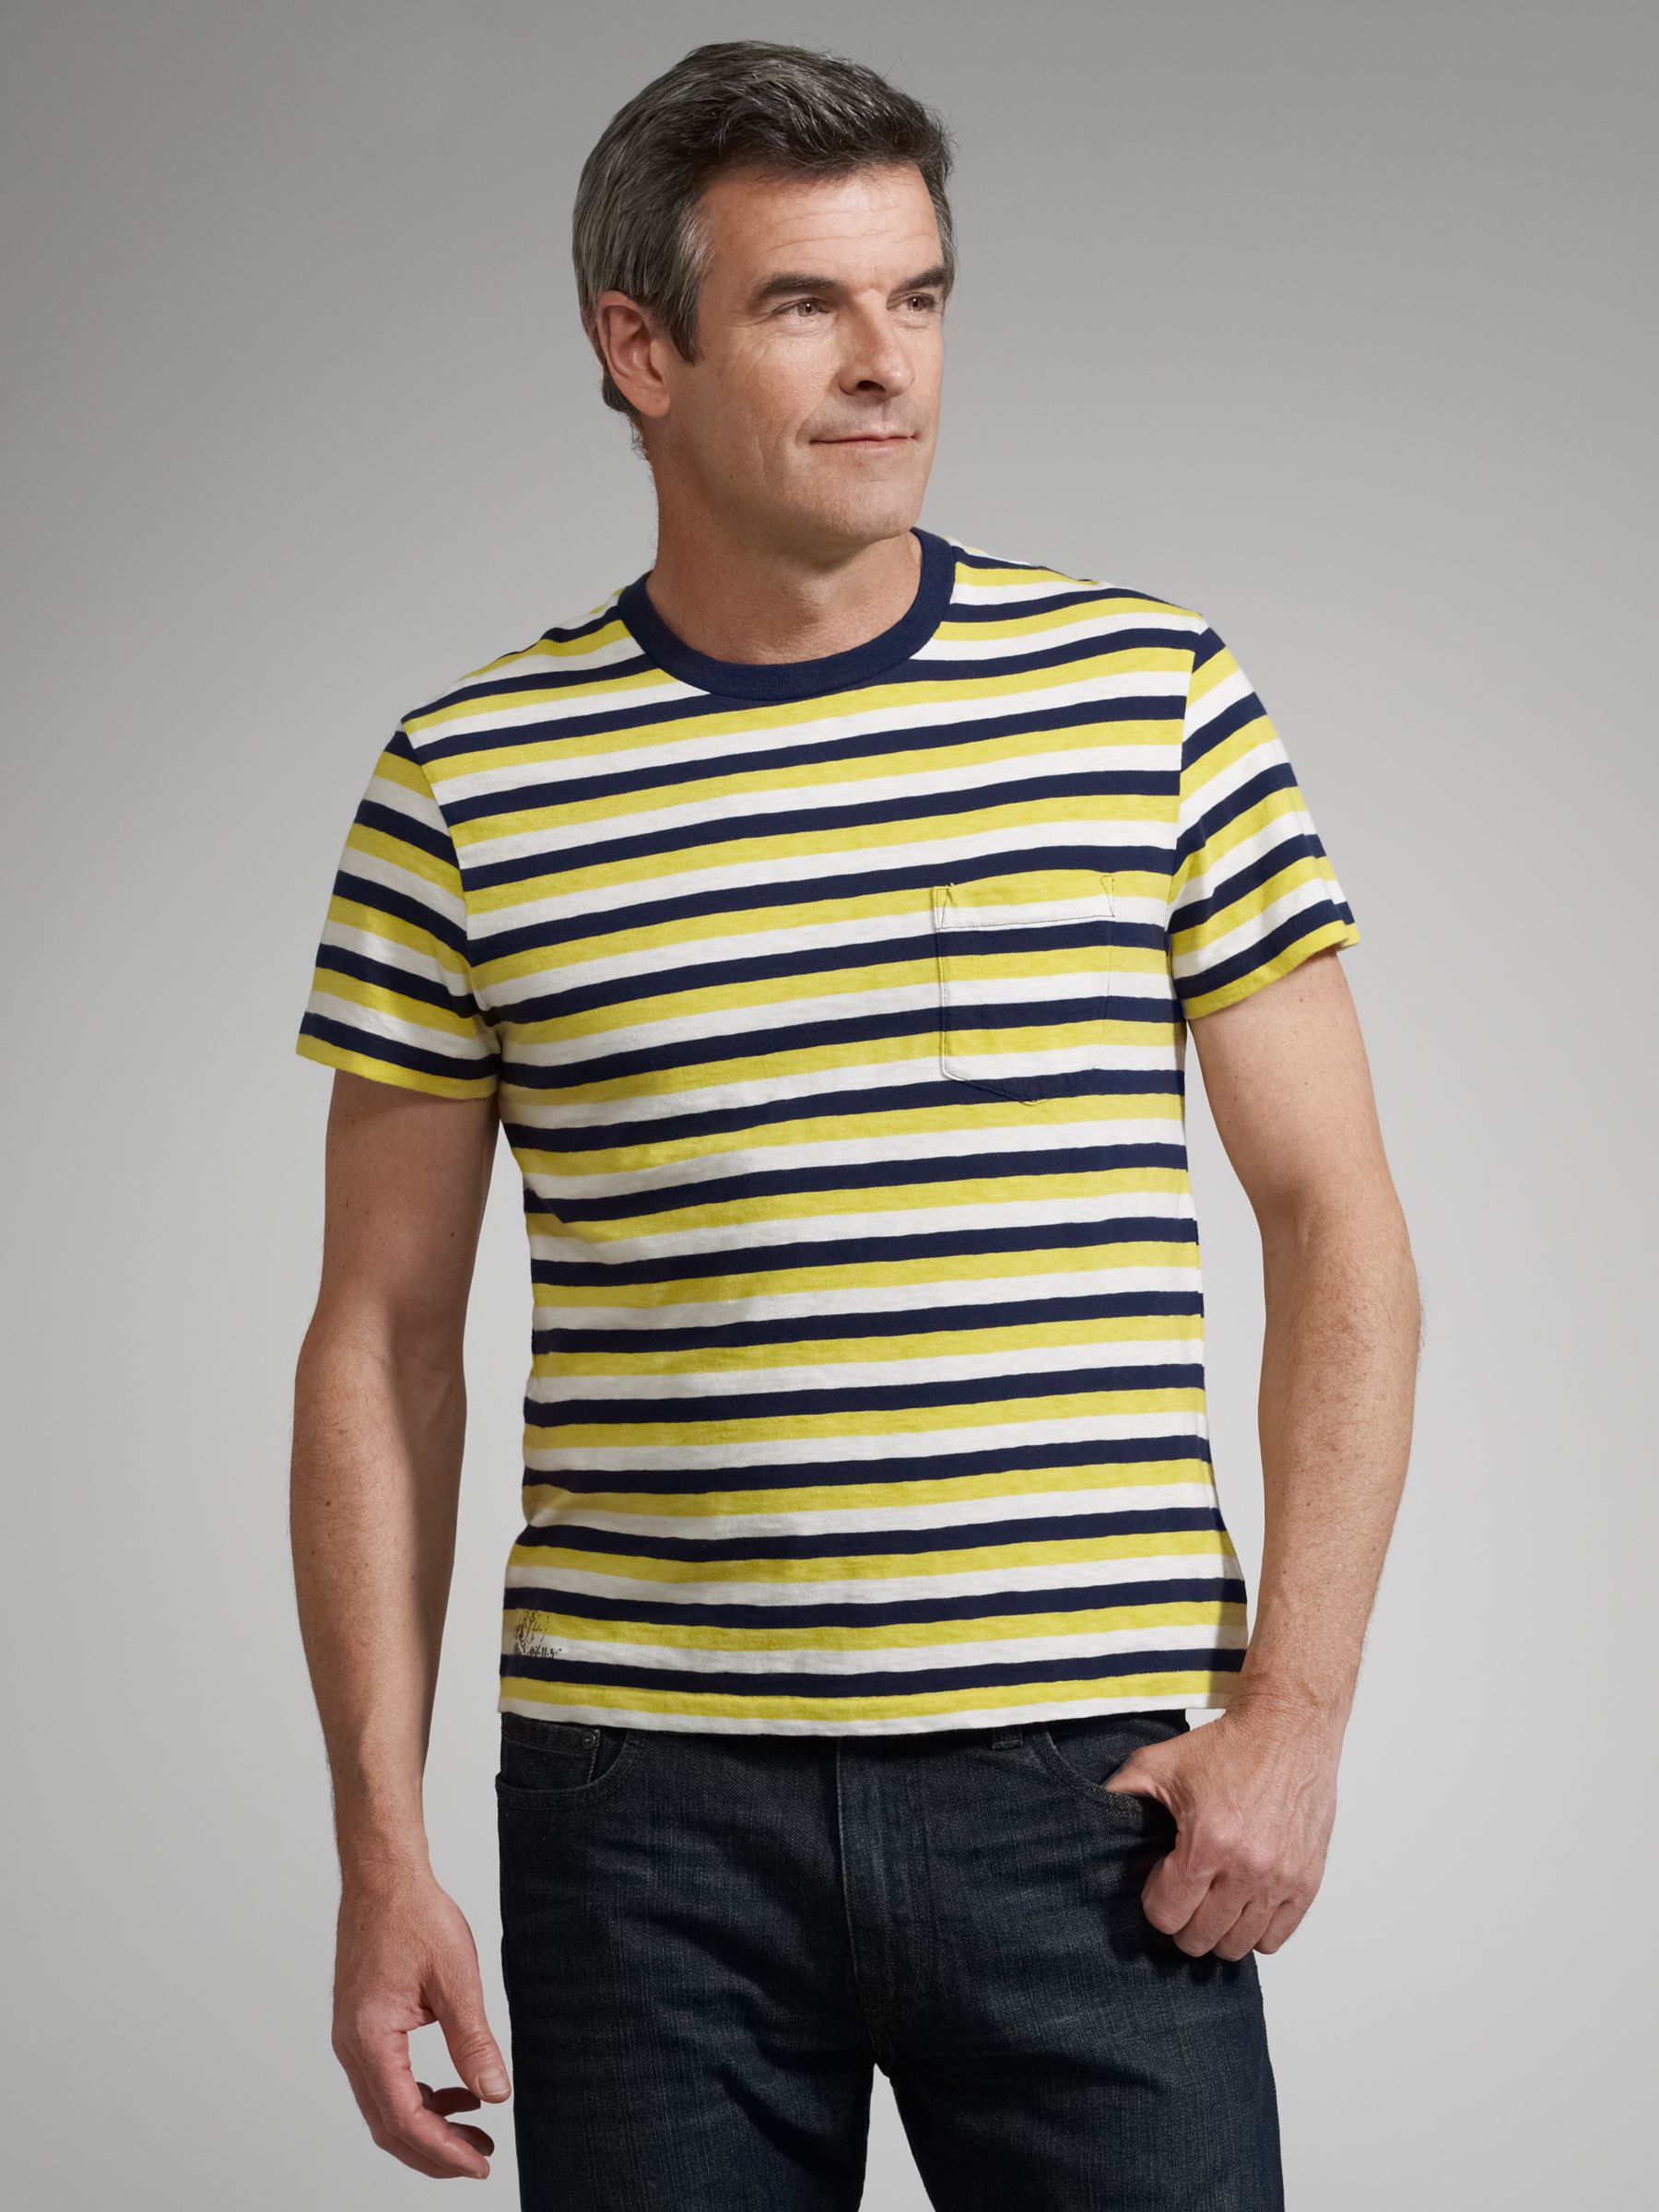 Stripe Short Sleeve T-Shirt,